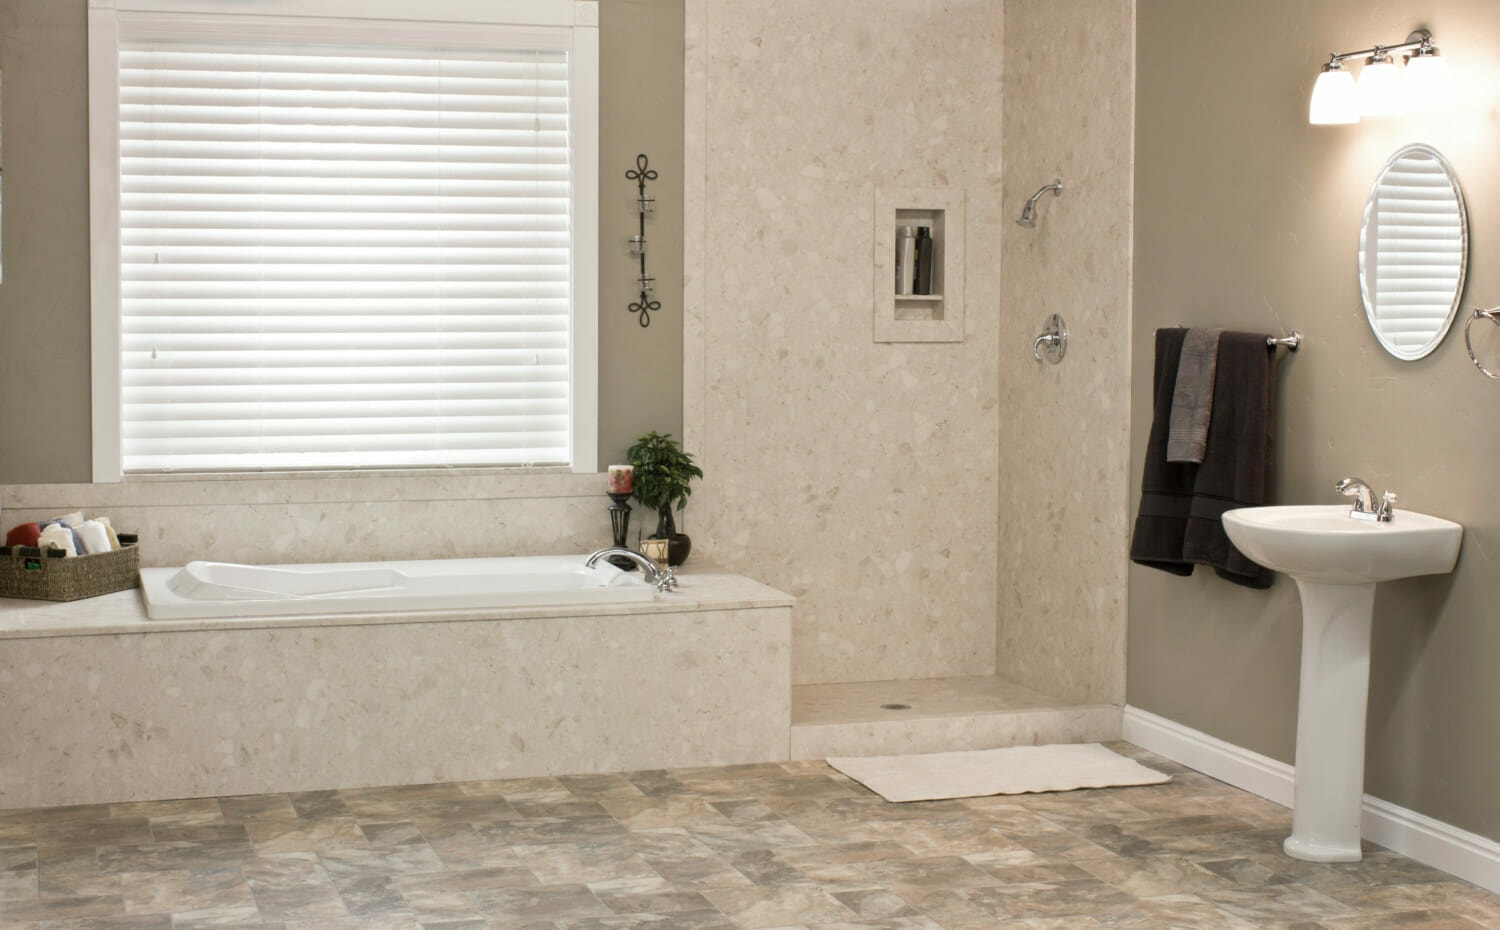 Five Star Bath Solutions of League City Lifetime Warranty, Waterproof for life